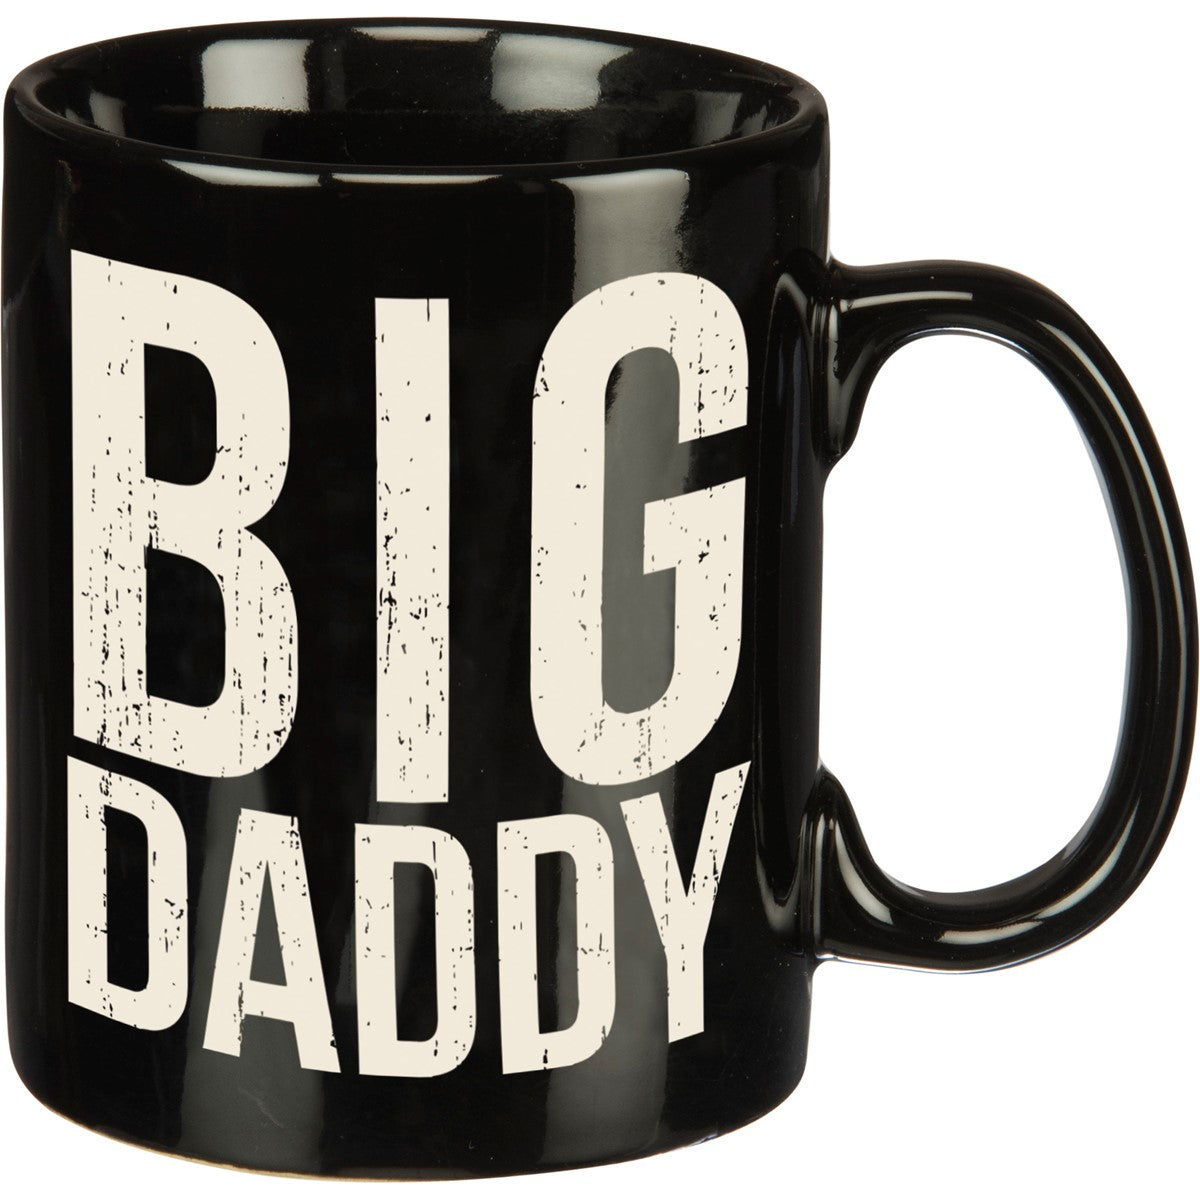 Big Daddy Mug